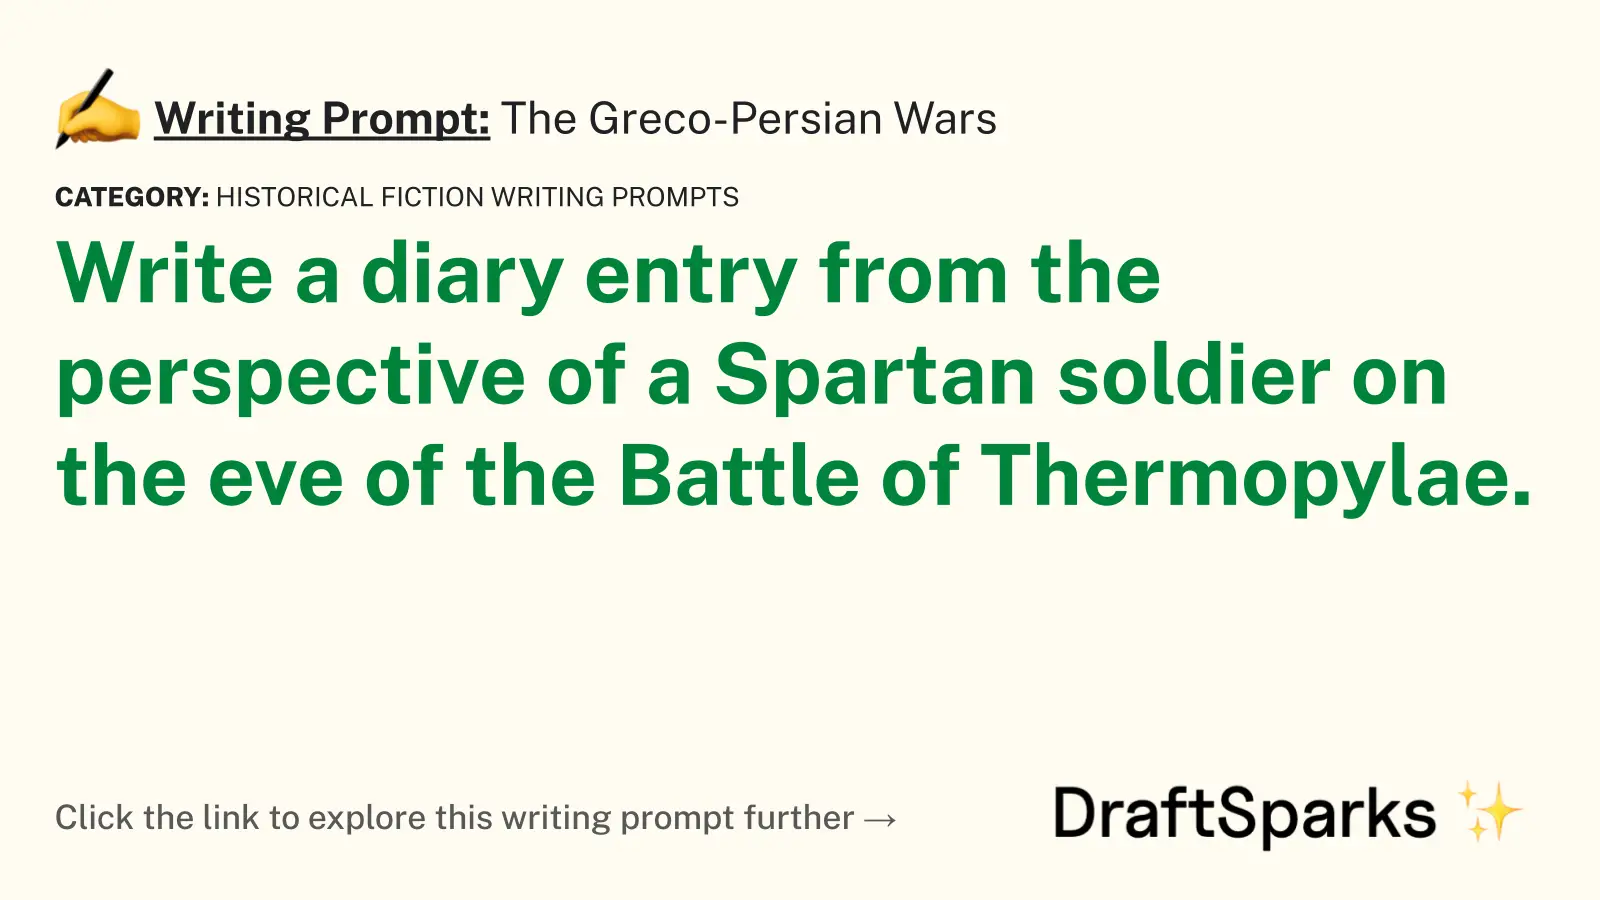 The Greco-Persian Wars